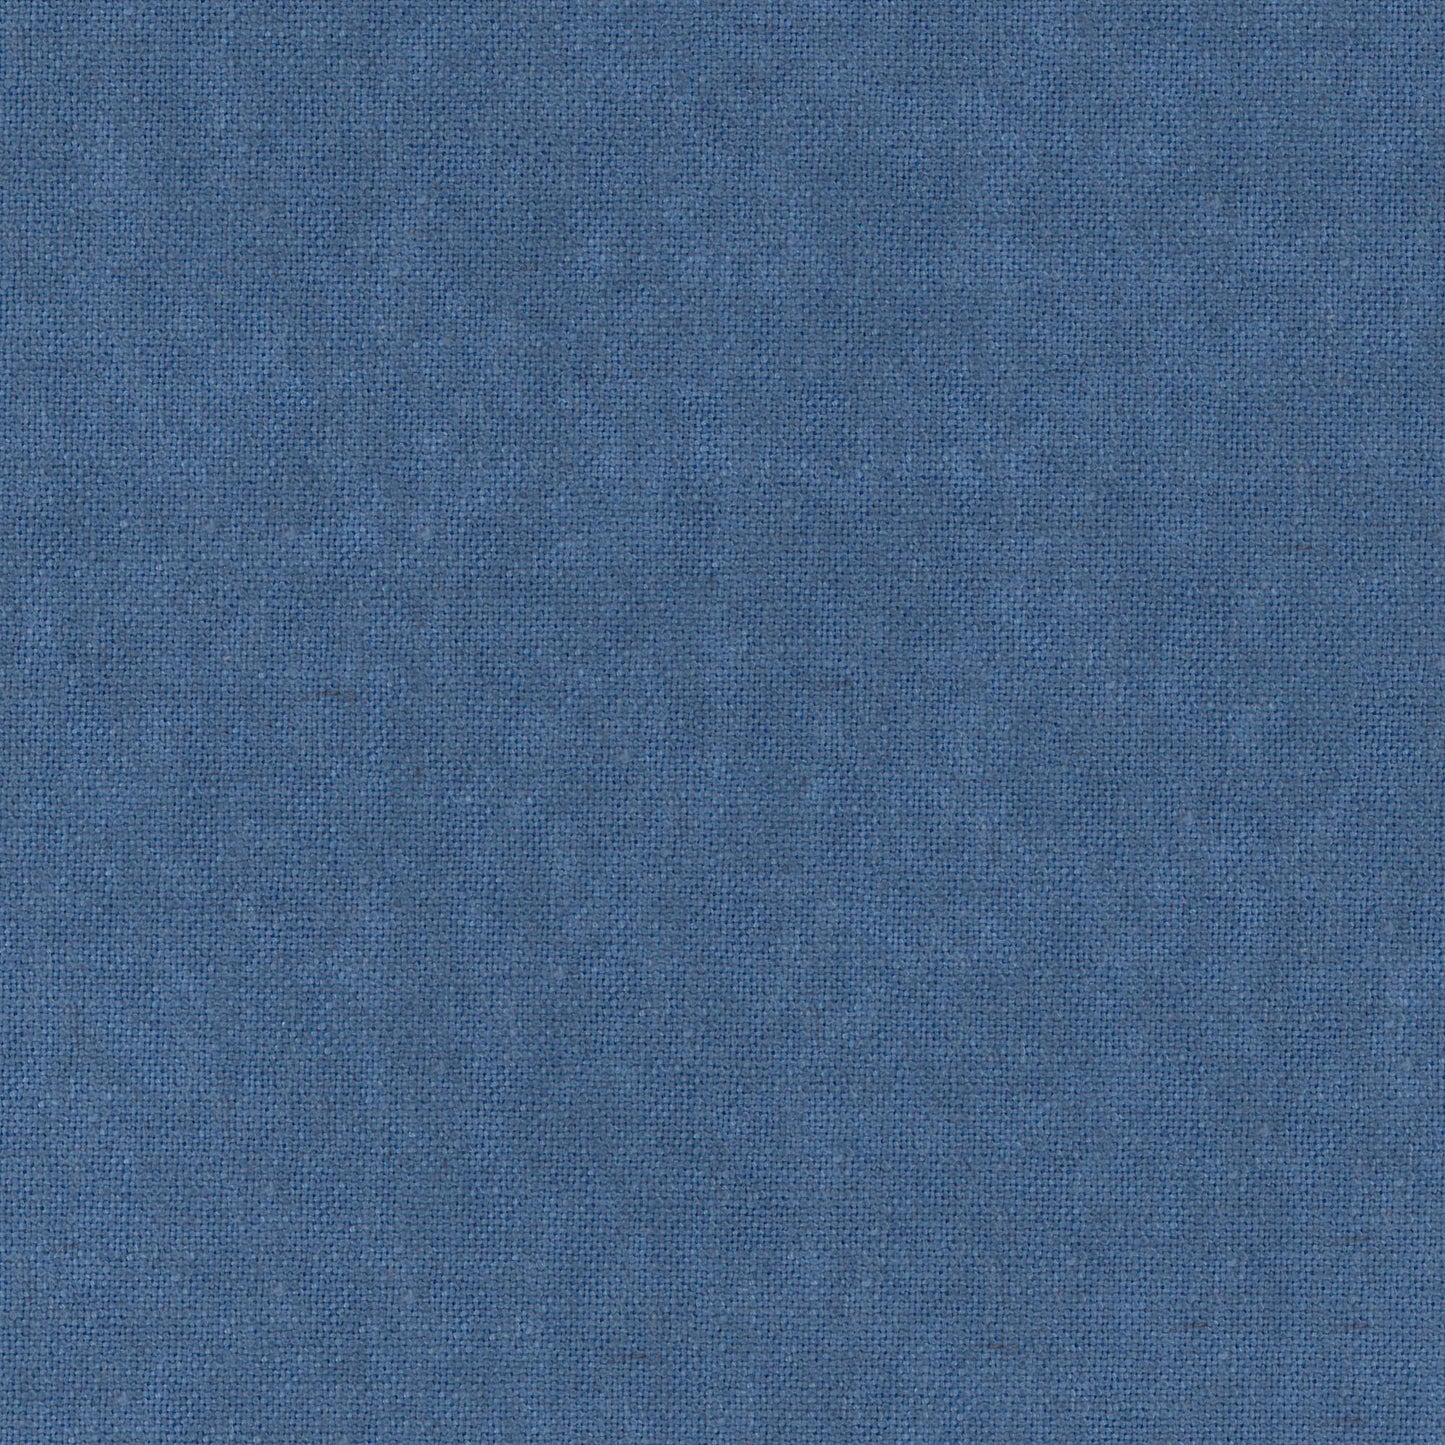 Home Fabrics - FibreGuard - Monterey - 39-Denim - Fabric per Meter